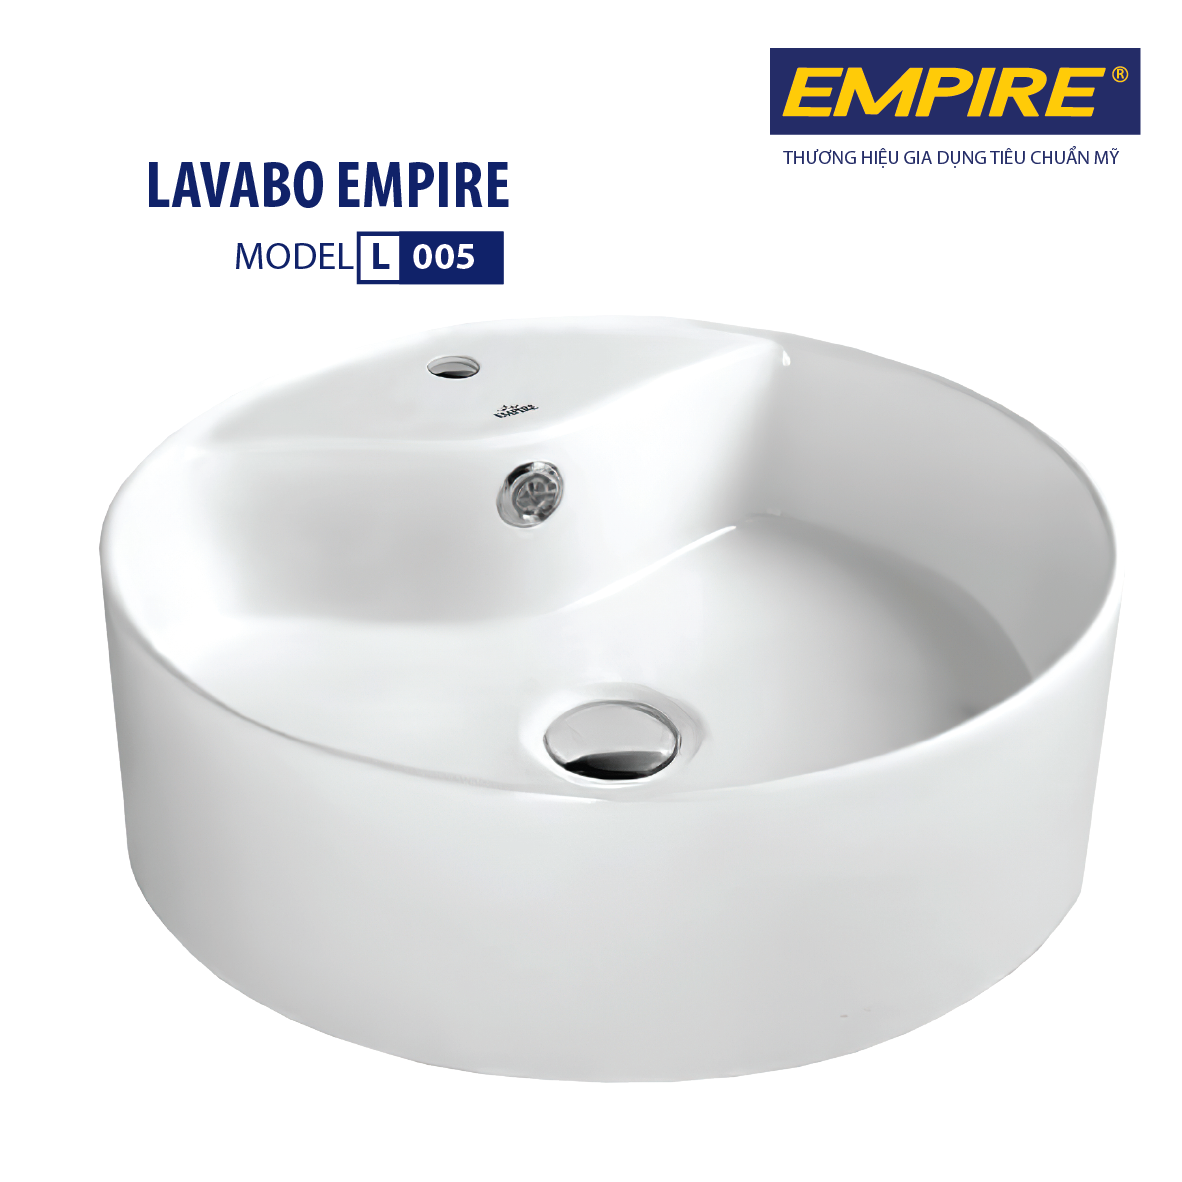 LAVABO EMPIRE EPVS L005